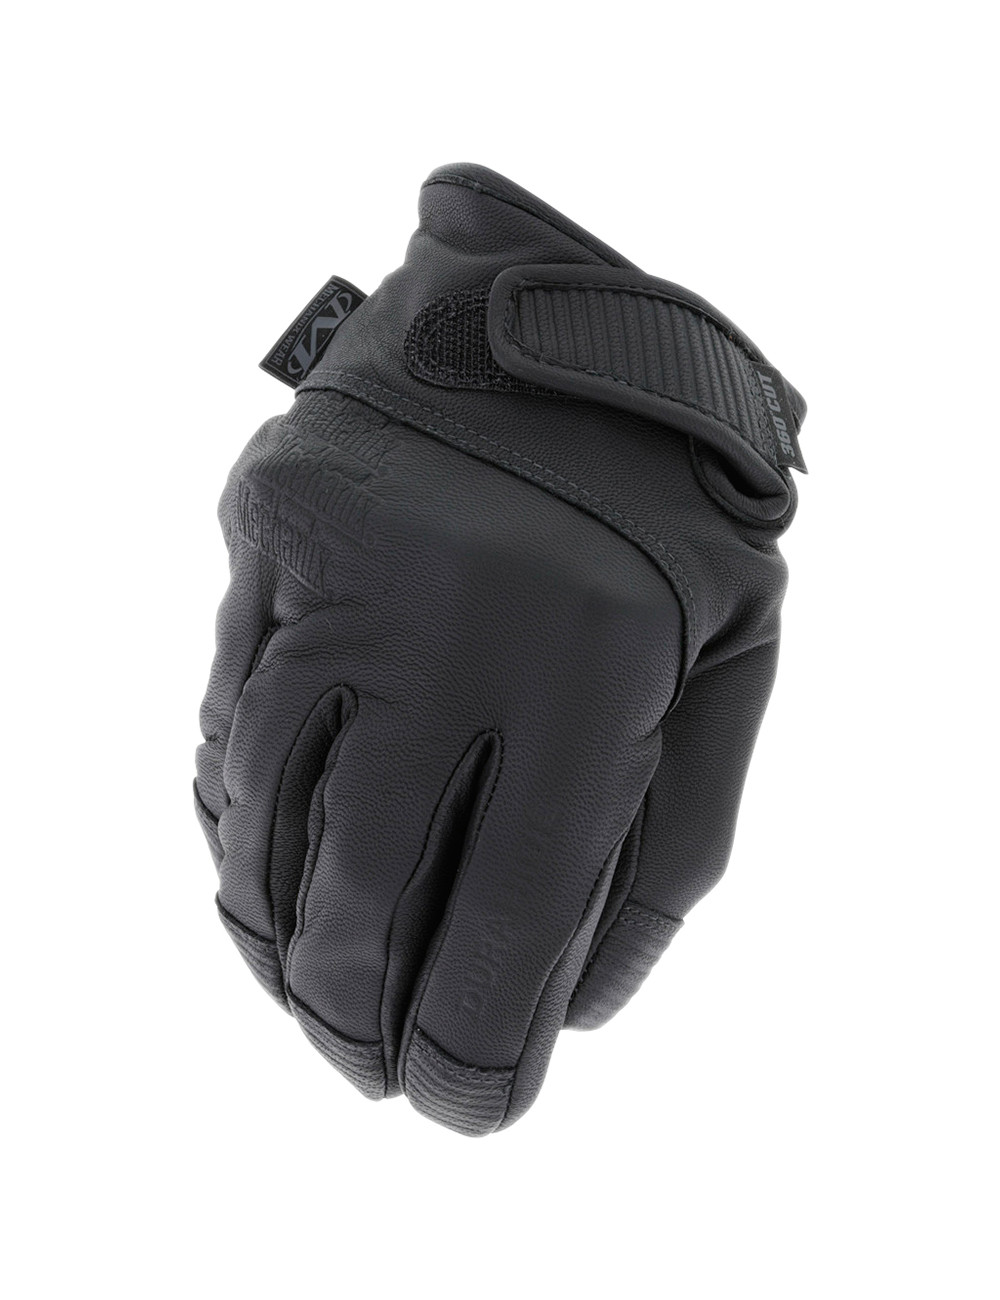 MECHANIX NSLE-55-010 Leather Needlestick Law Enforcement Gloves L